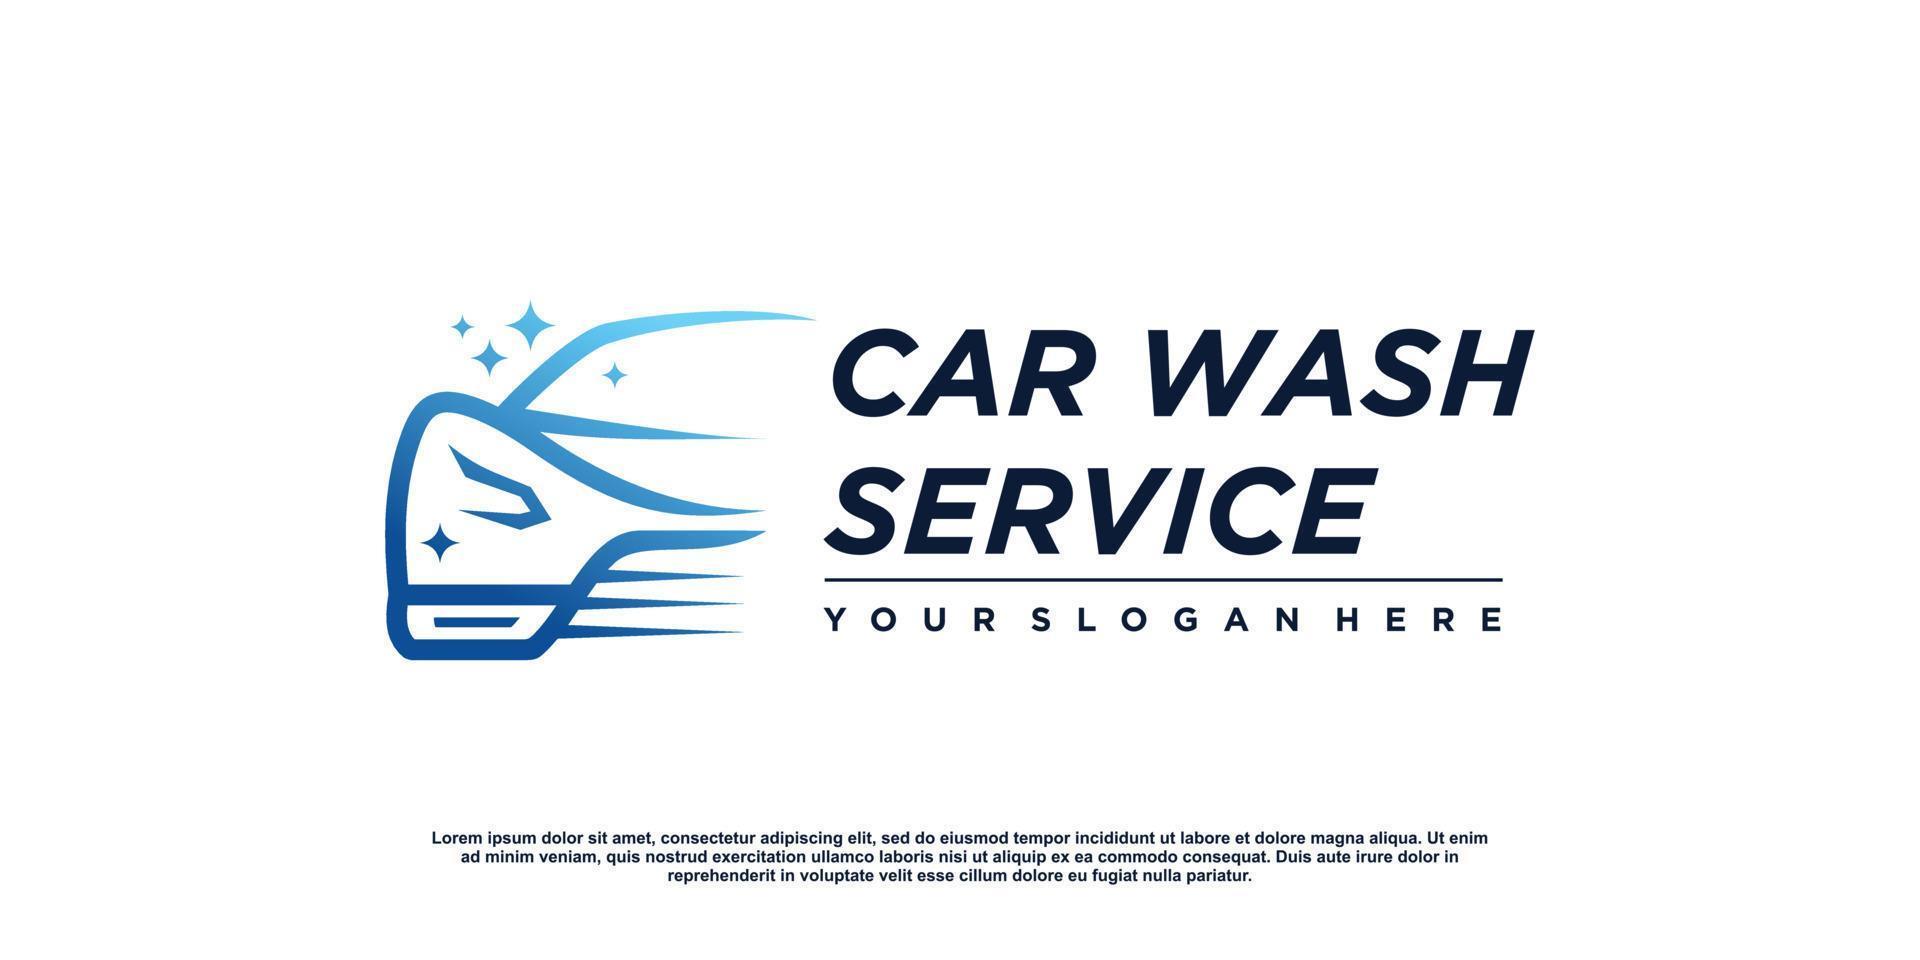 Car wash logo design with creative concept Premium Vector